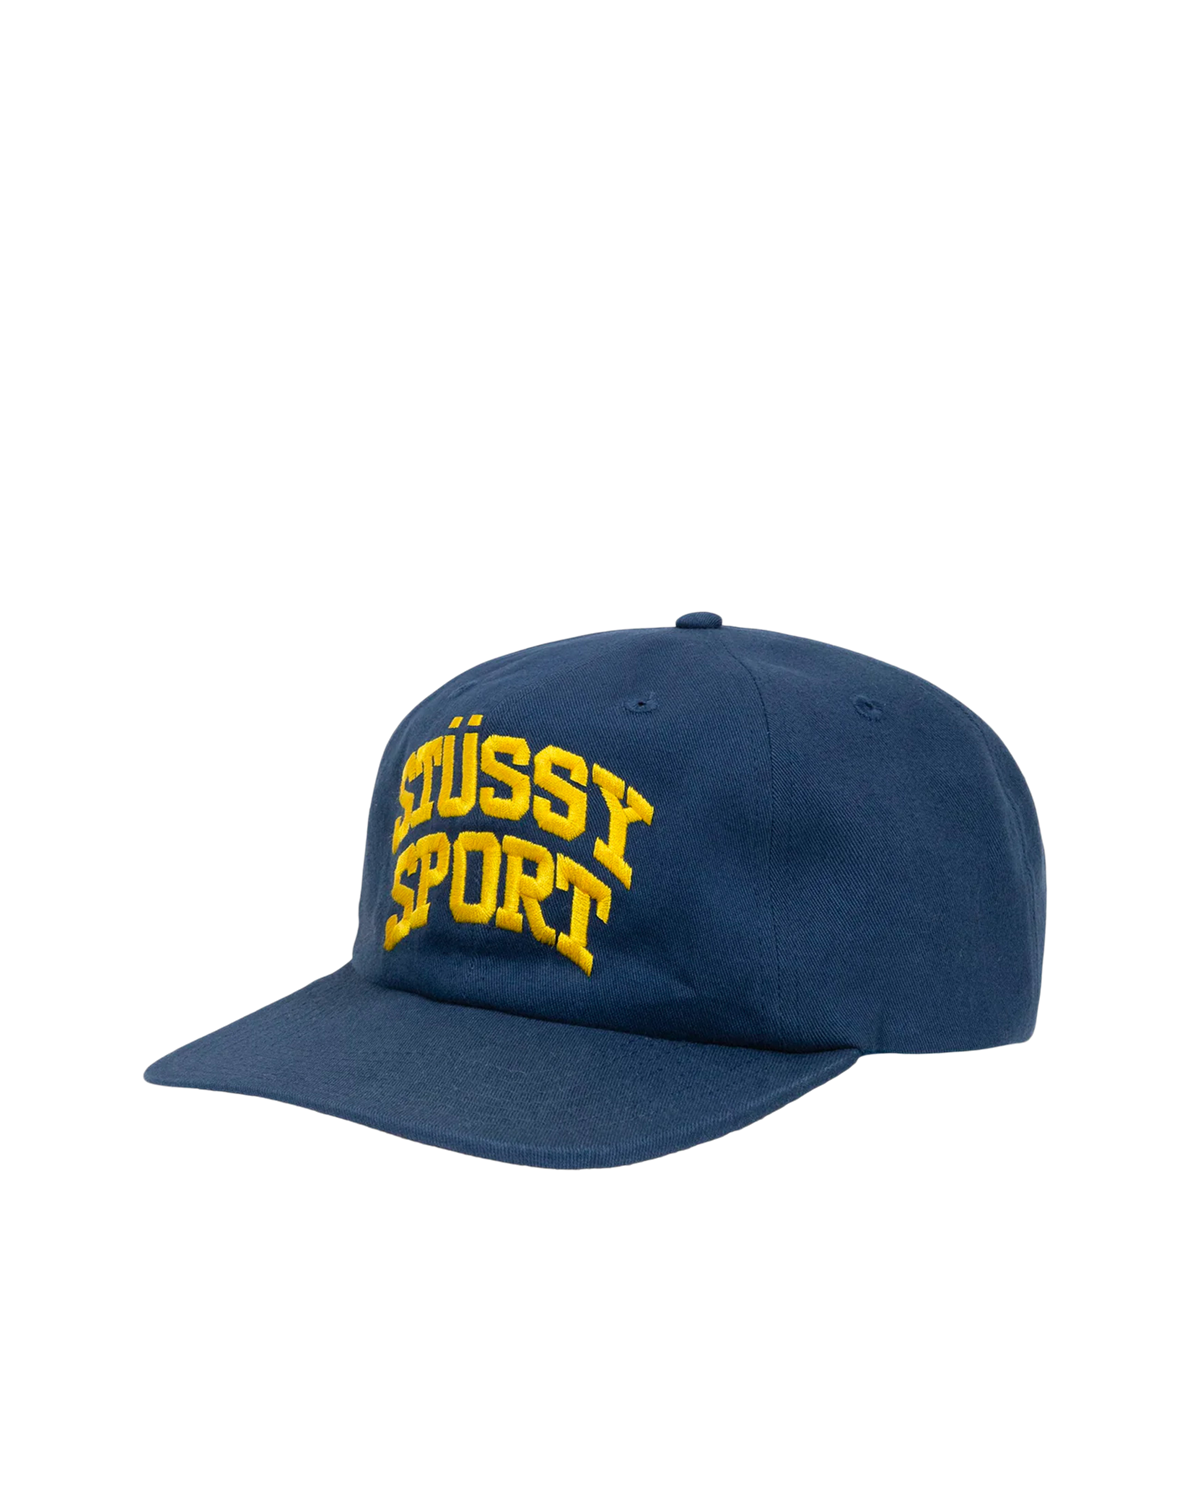 Stussy Sport Cap Stussy Headwear Caps Blue